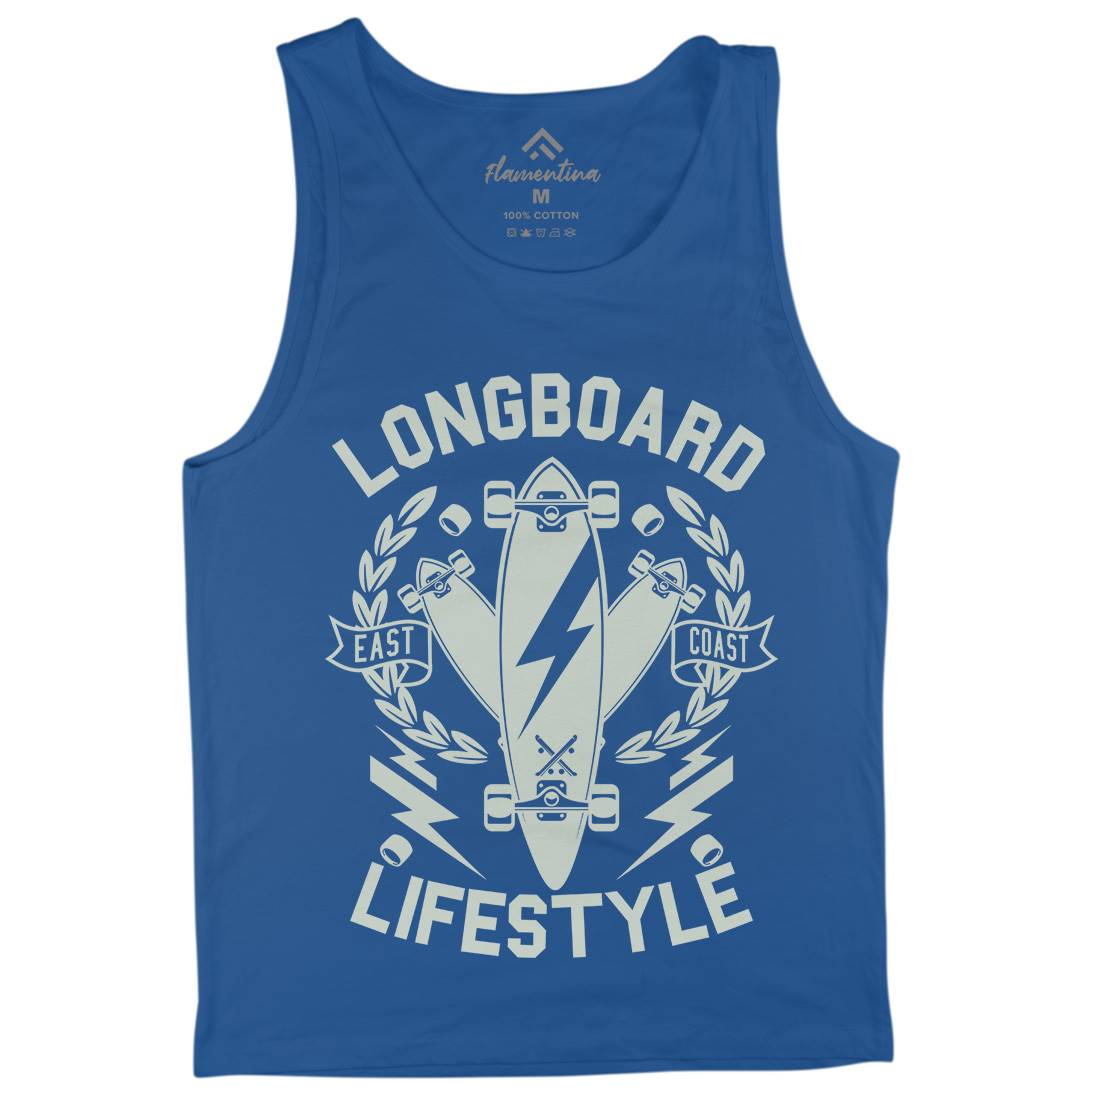 Longboard Lifestyle Mens Tank Top Vest Skate A251